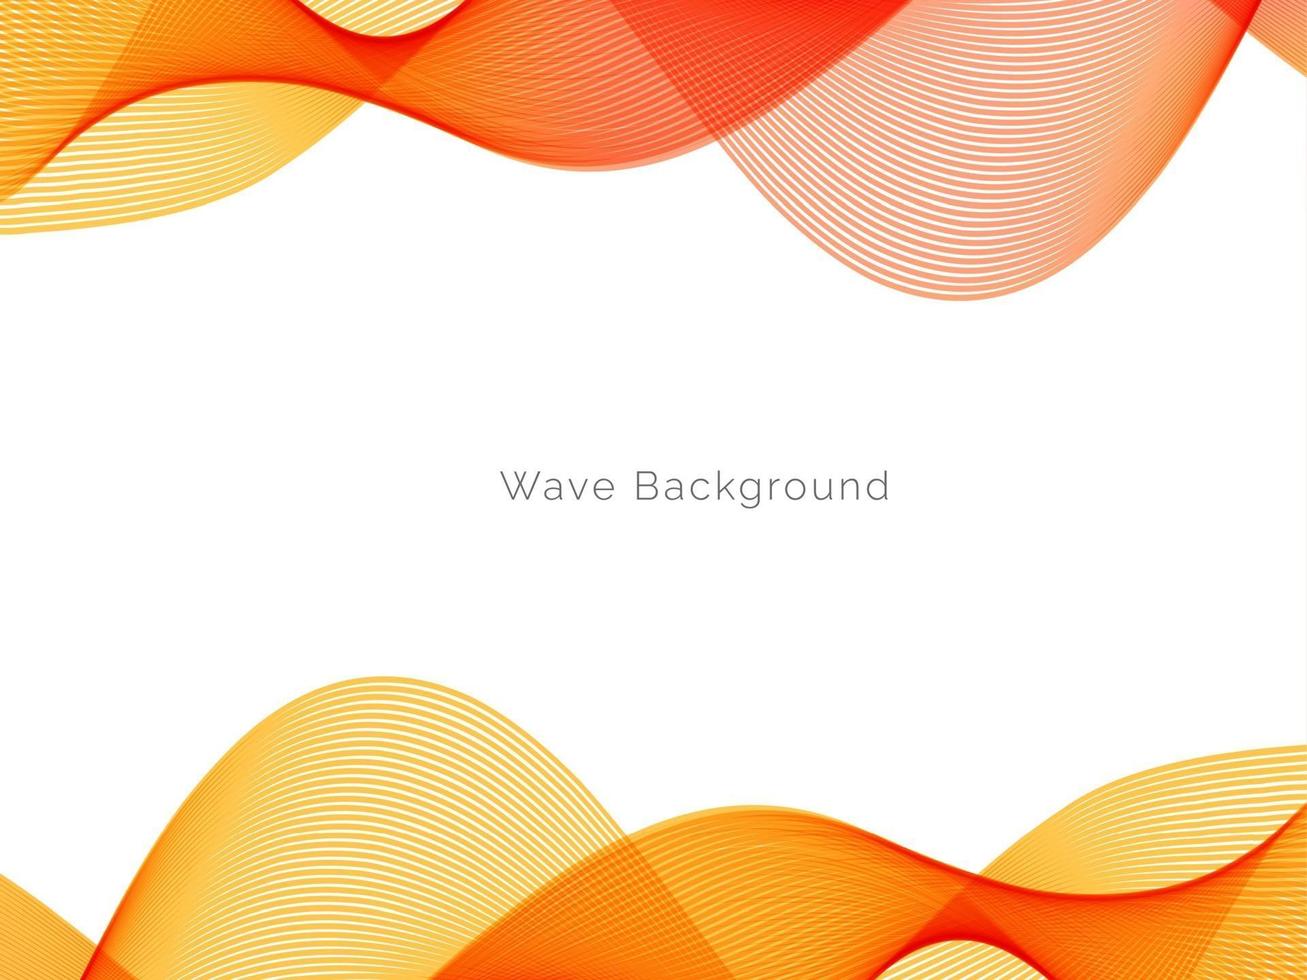 Decorative design modern pattern with stylish smooth orange wave background vector